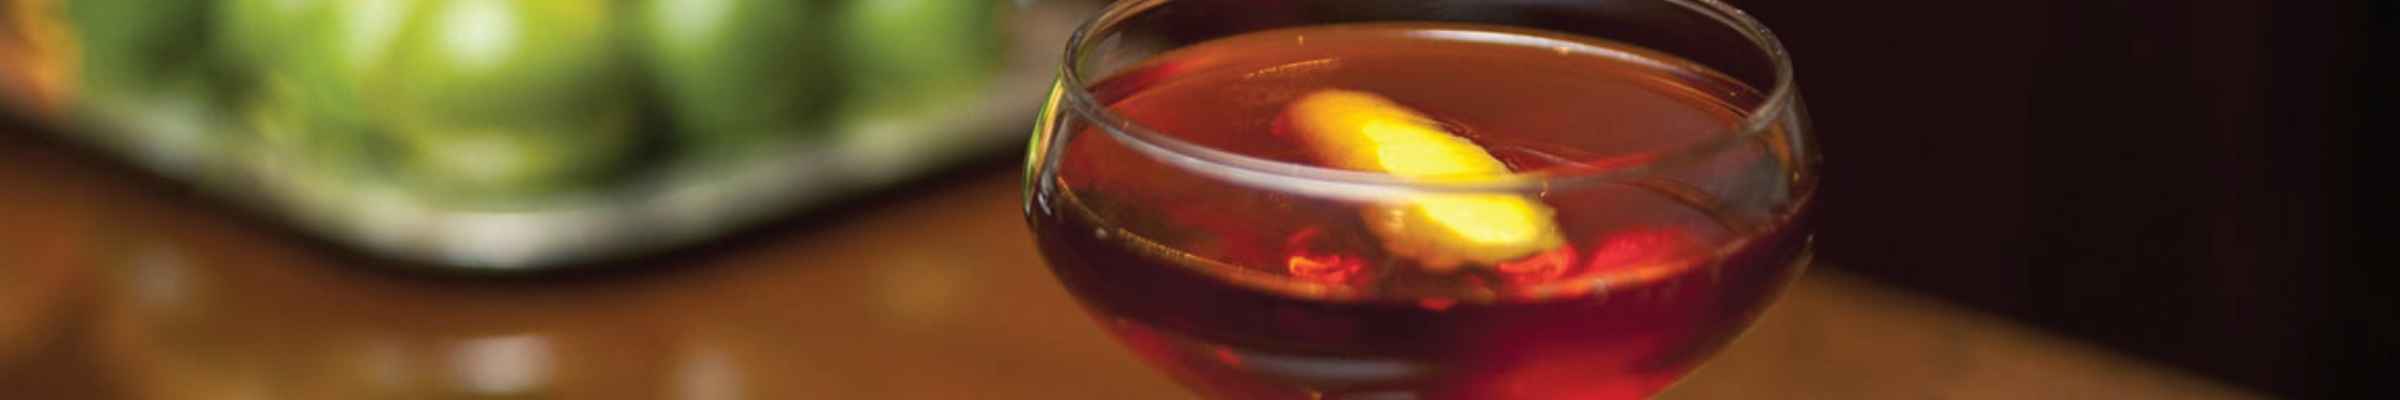 Vermouth | Conroy Vins et Spiritueux